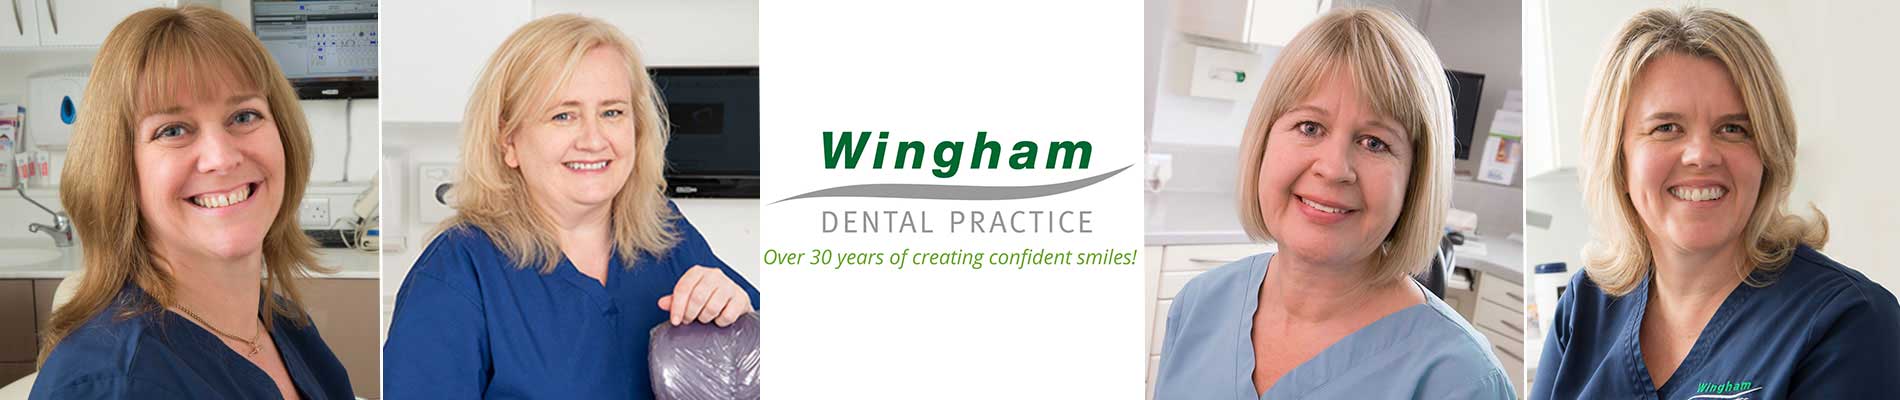 Wingham Dental Practice